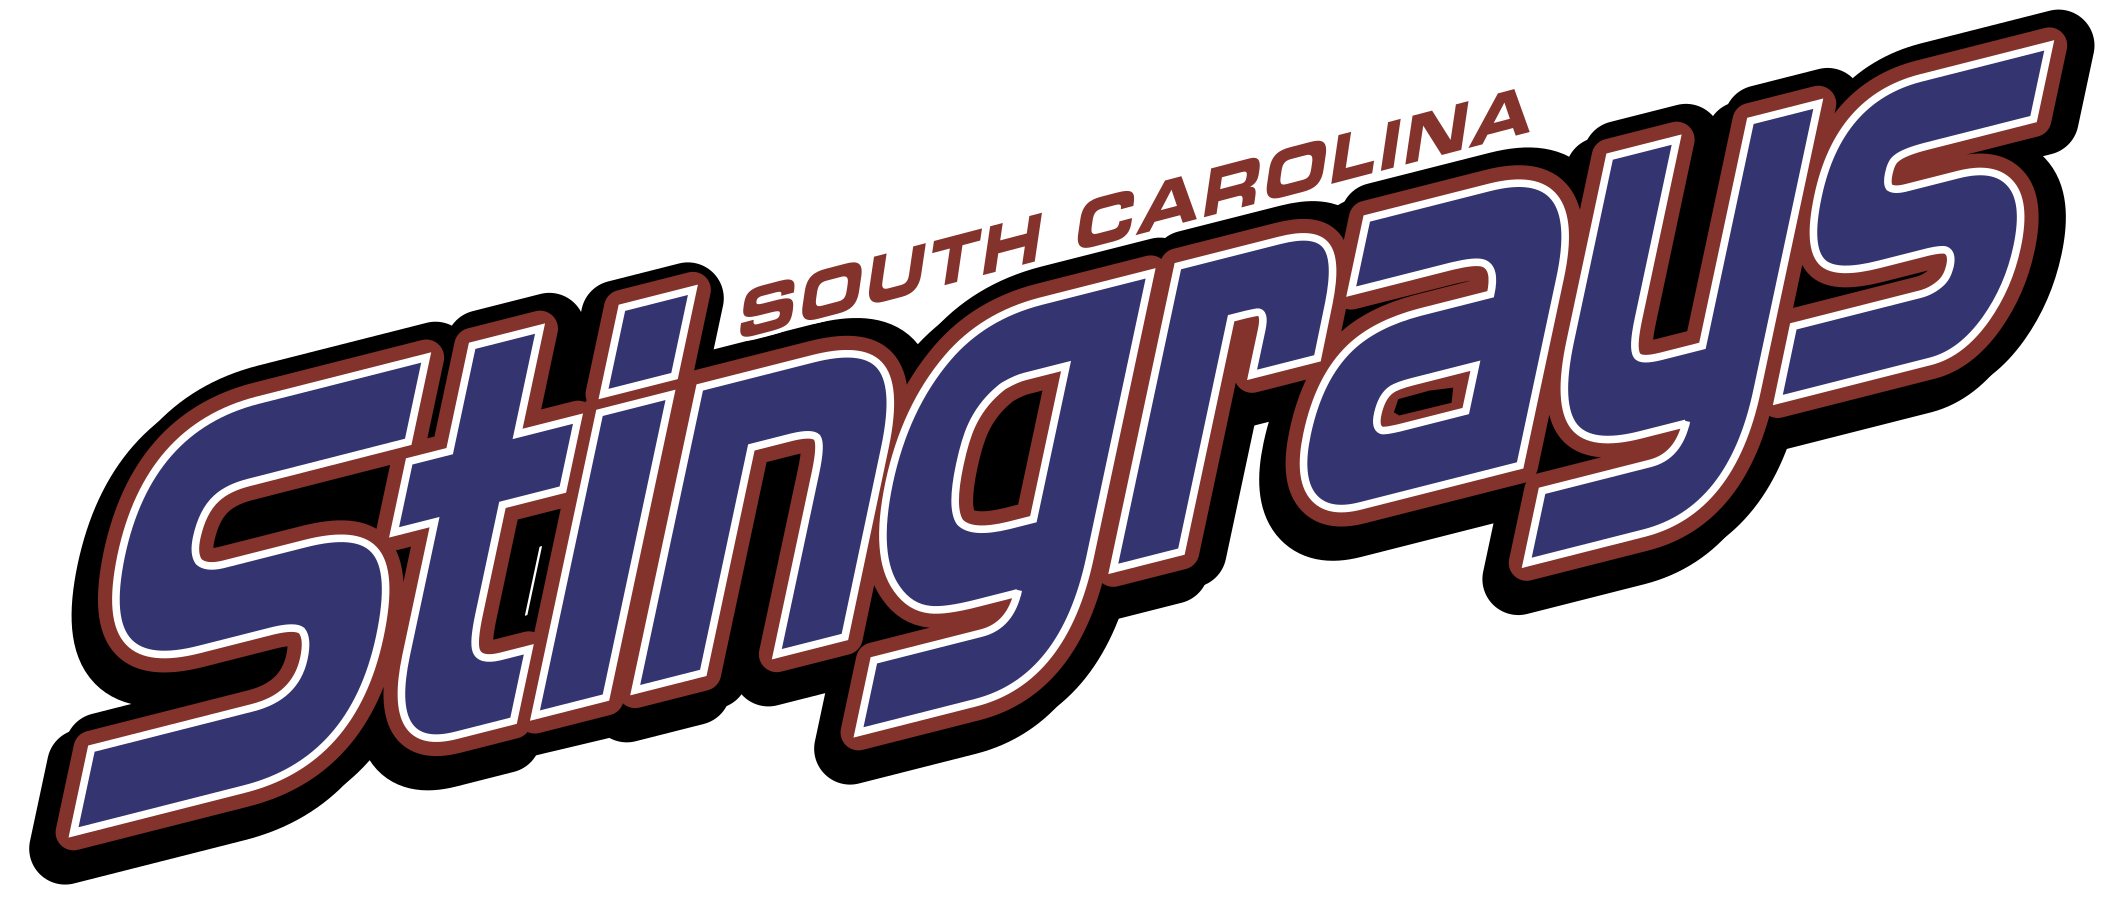 South Carolina Stingrays PNG HD Quality